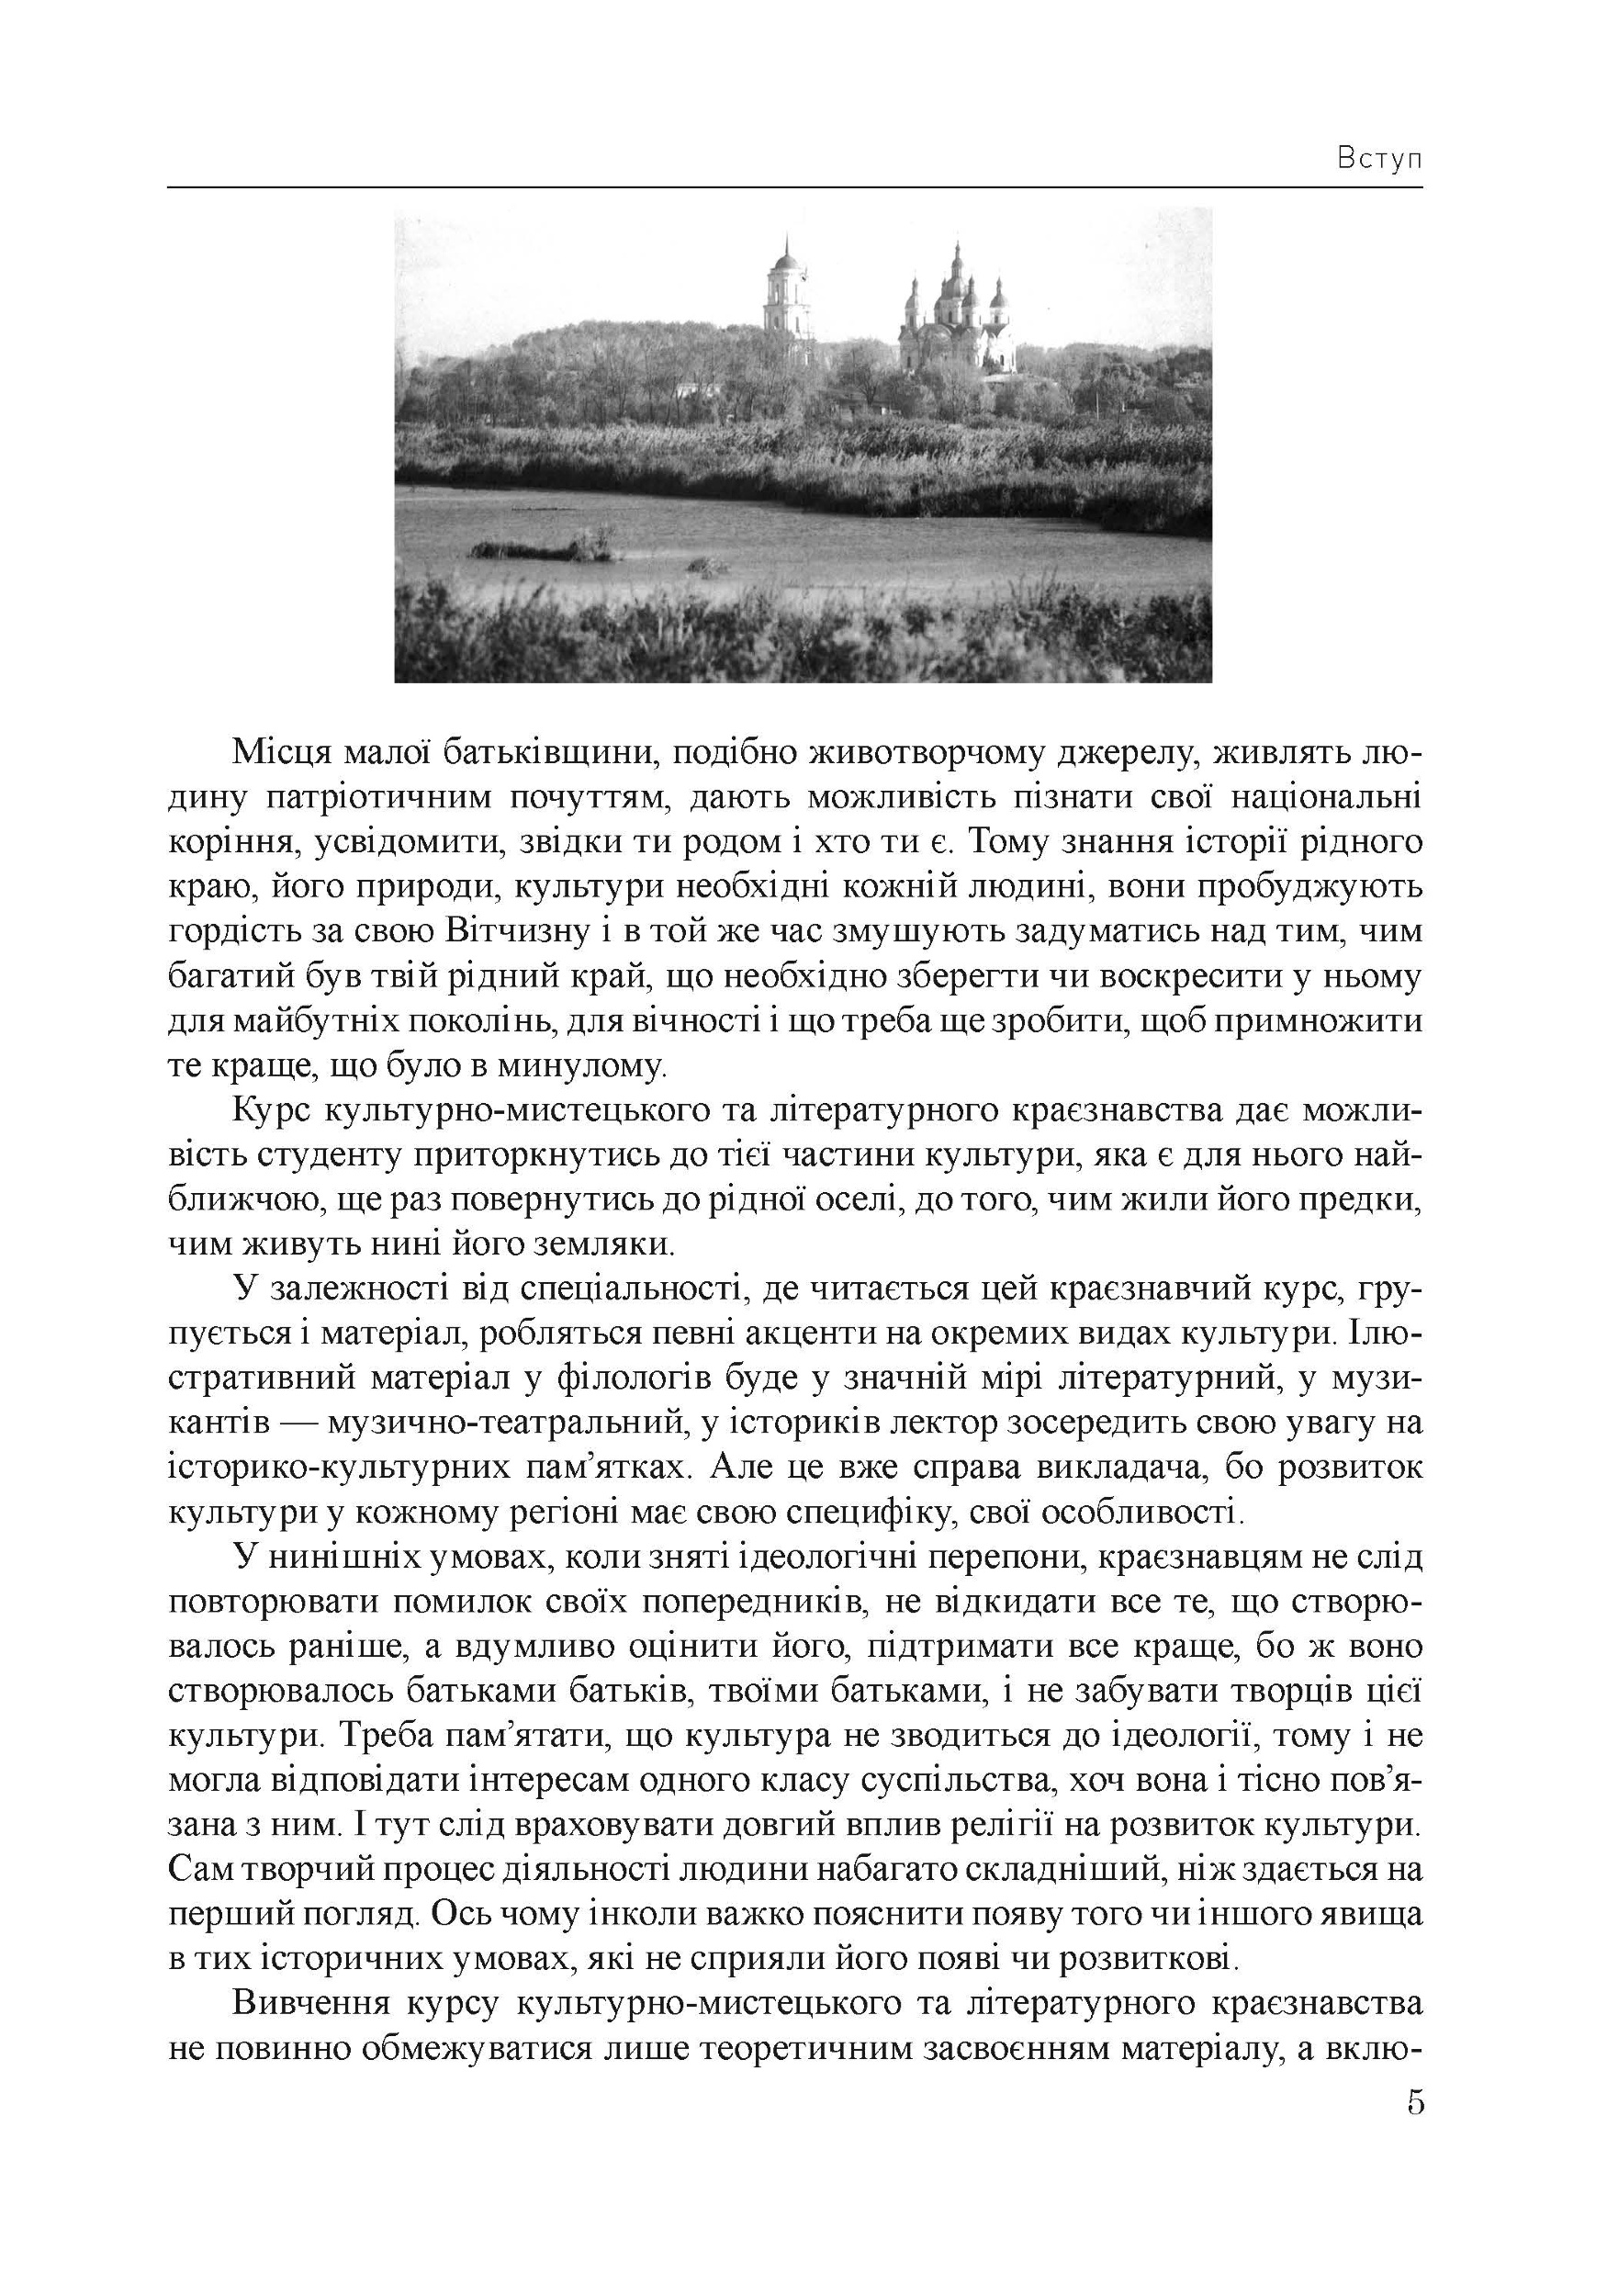 Краєзнавство: культурно-мистецьке та літературне  (2019 год). Автор — Самойленко Г.В.. 